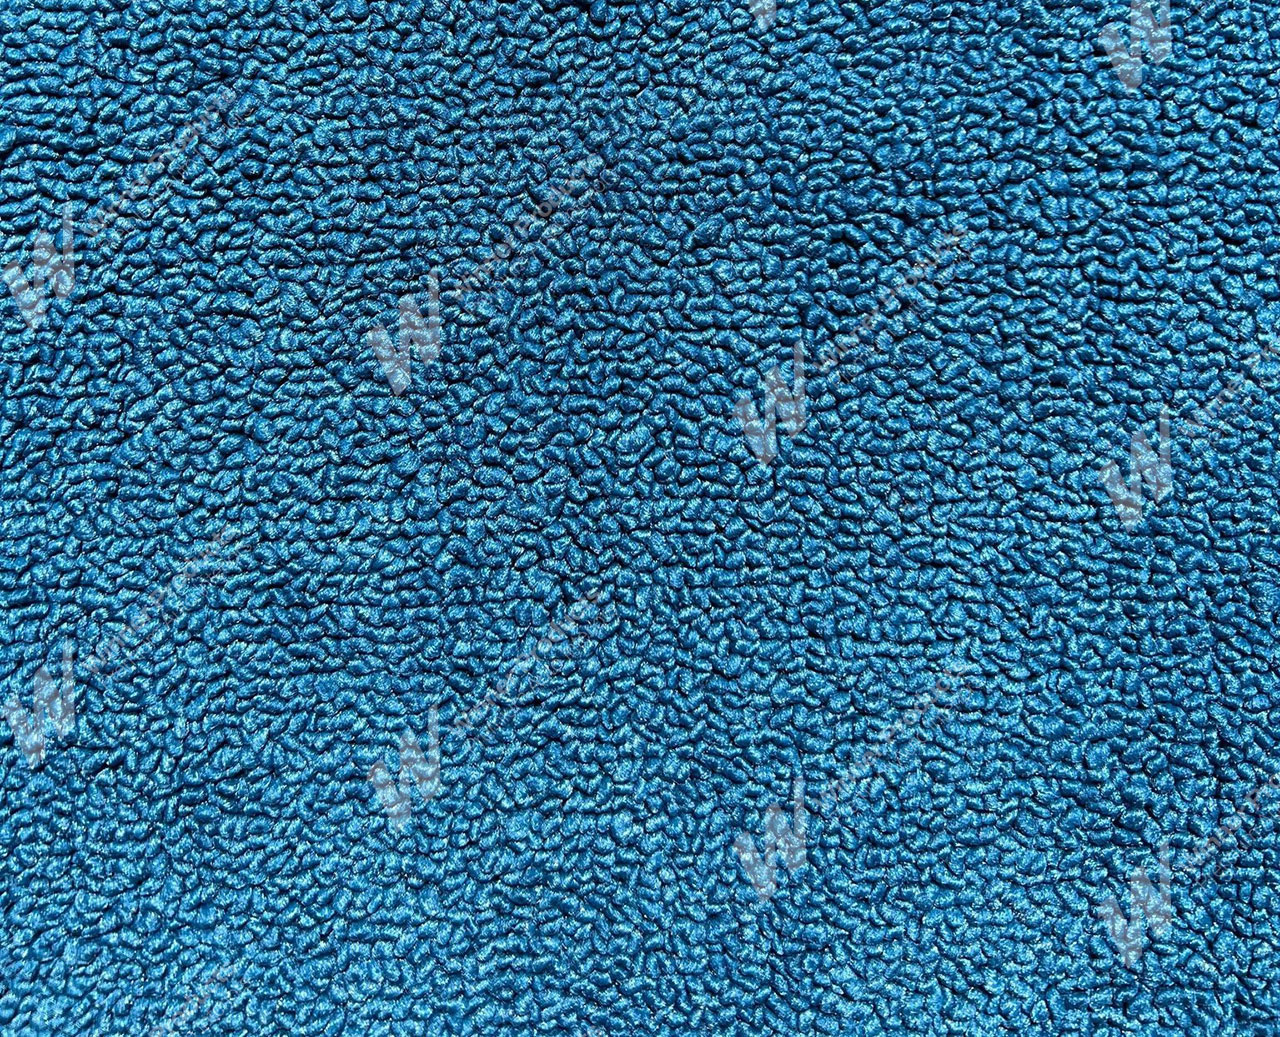 Holden Standard HR Standard Wagon E50 Dover Blue Carpet (Image 1 of 1)